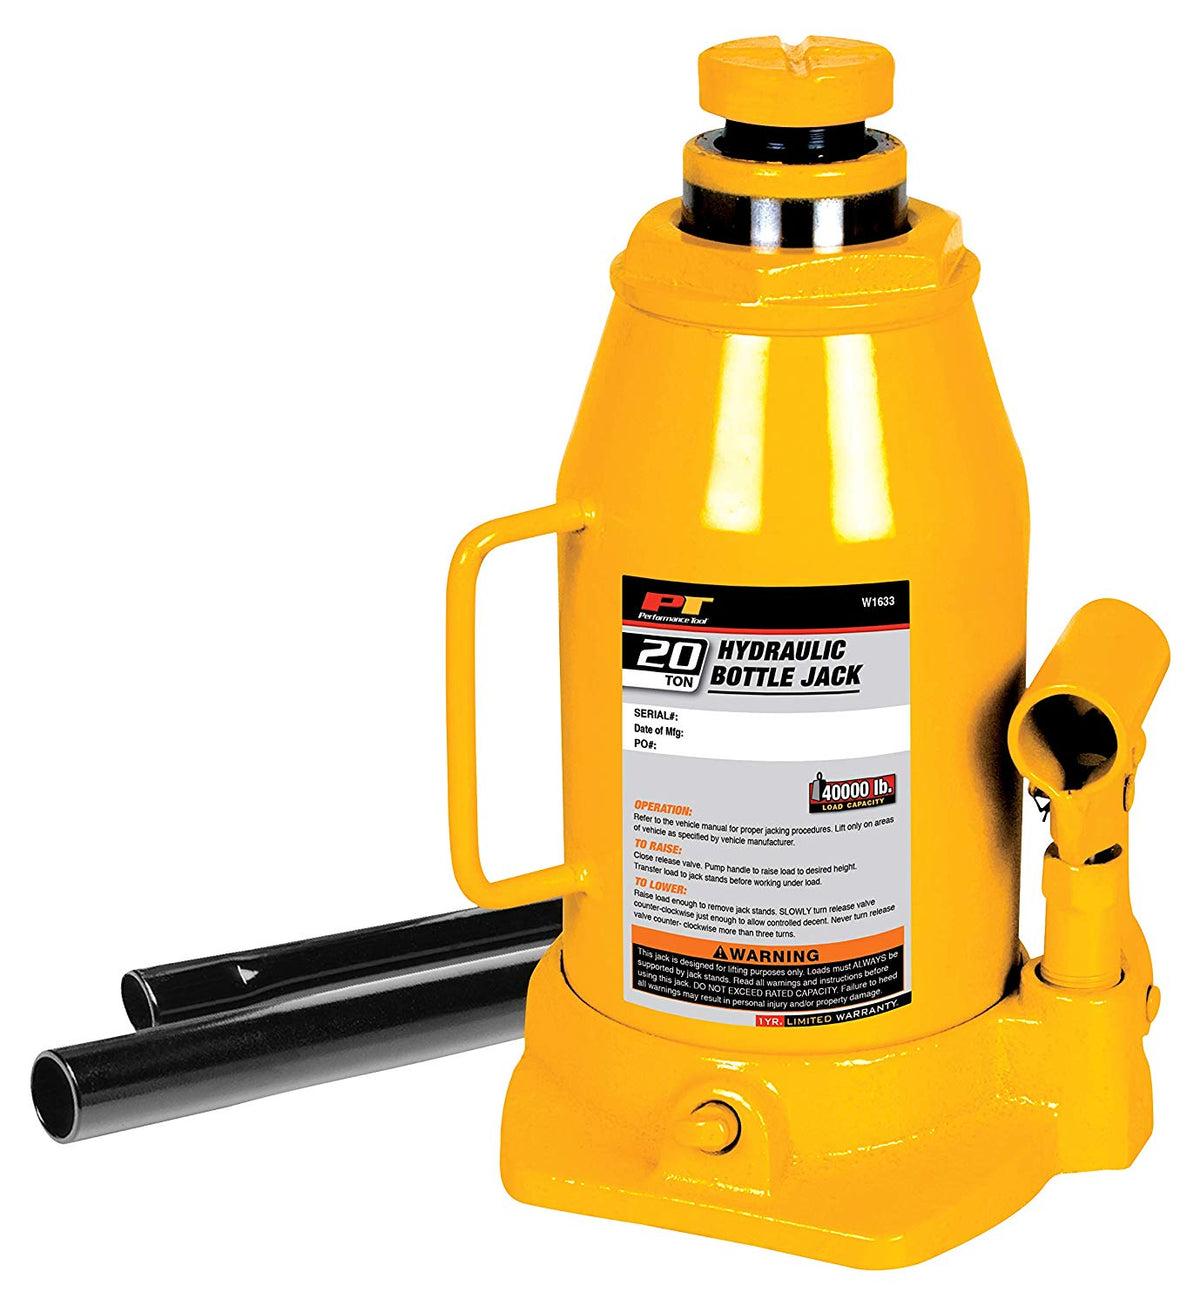 Performance Tool W1633 Hydraulic Bottle Jack, 20 Ton Load Capacity